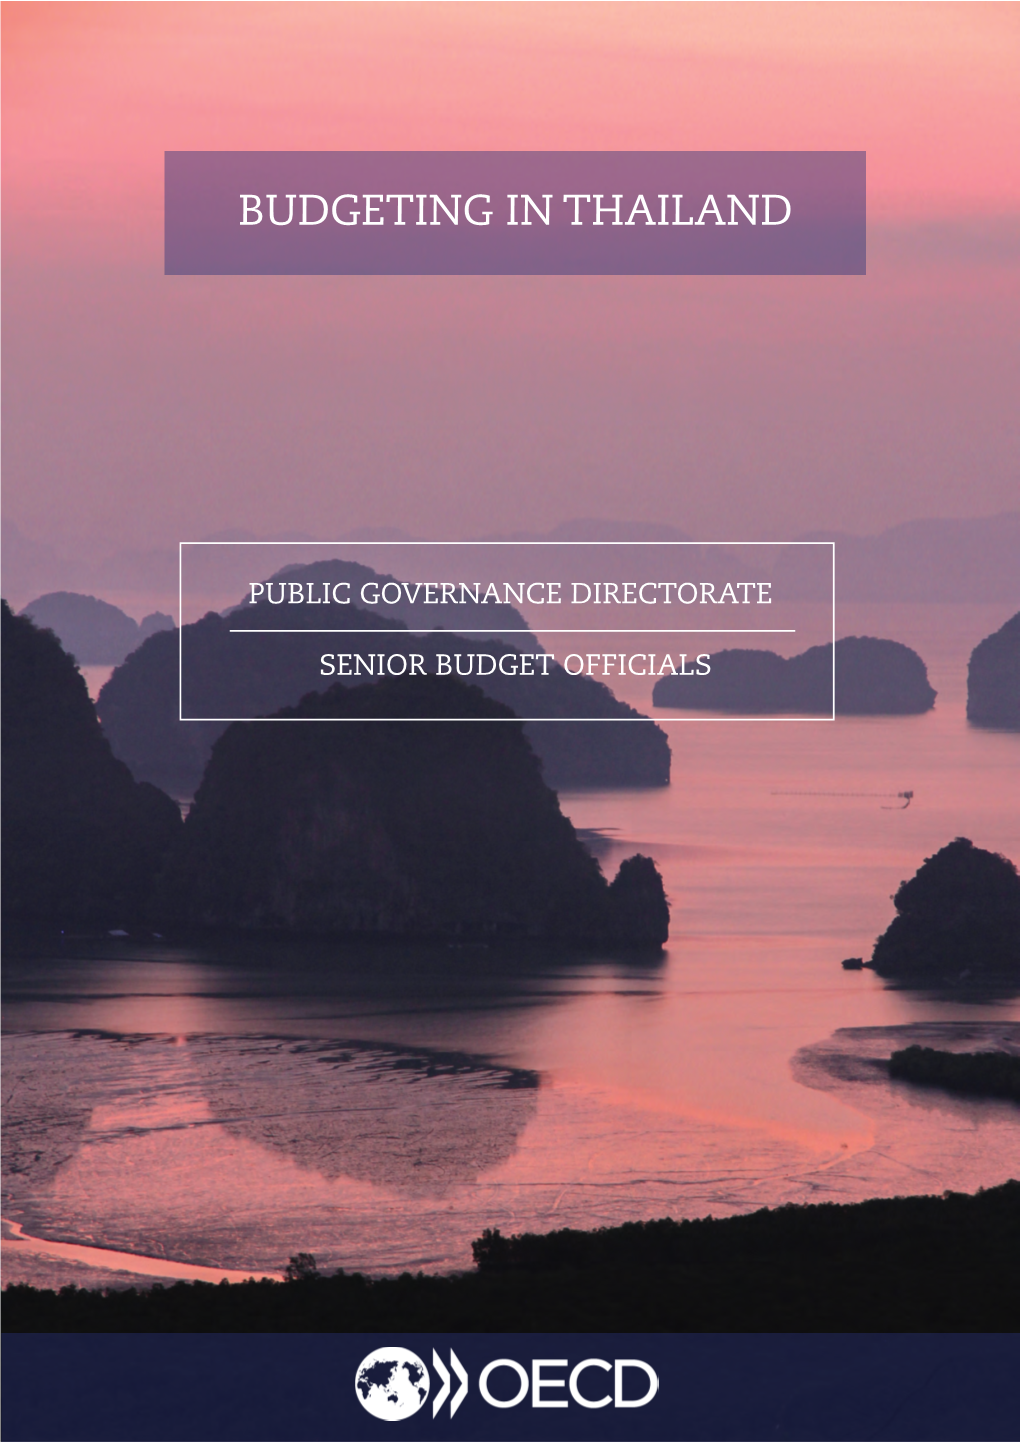 OECD Journal on Budgeting, Vol